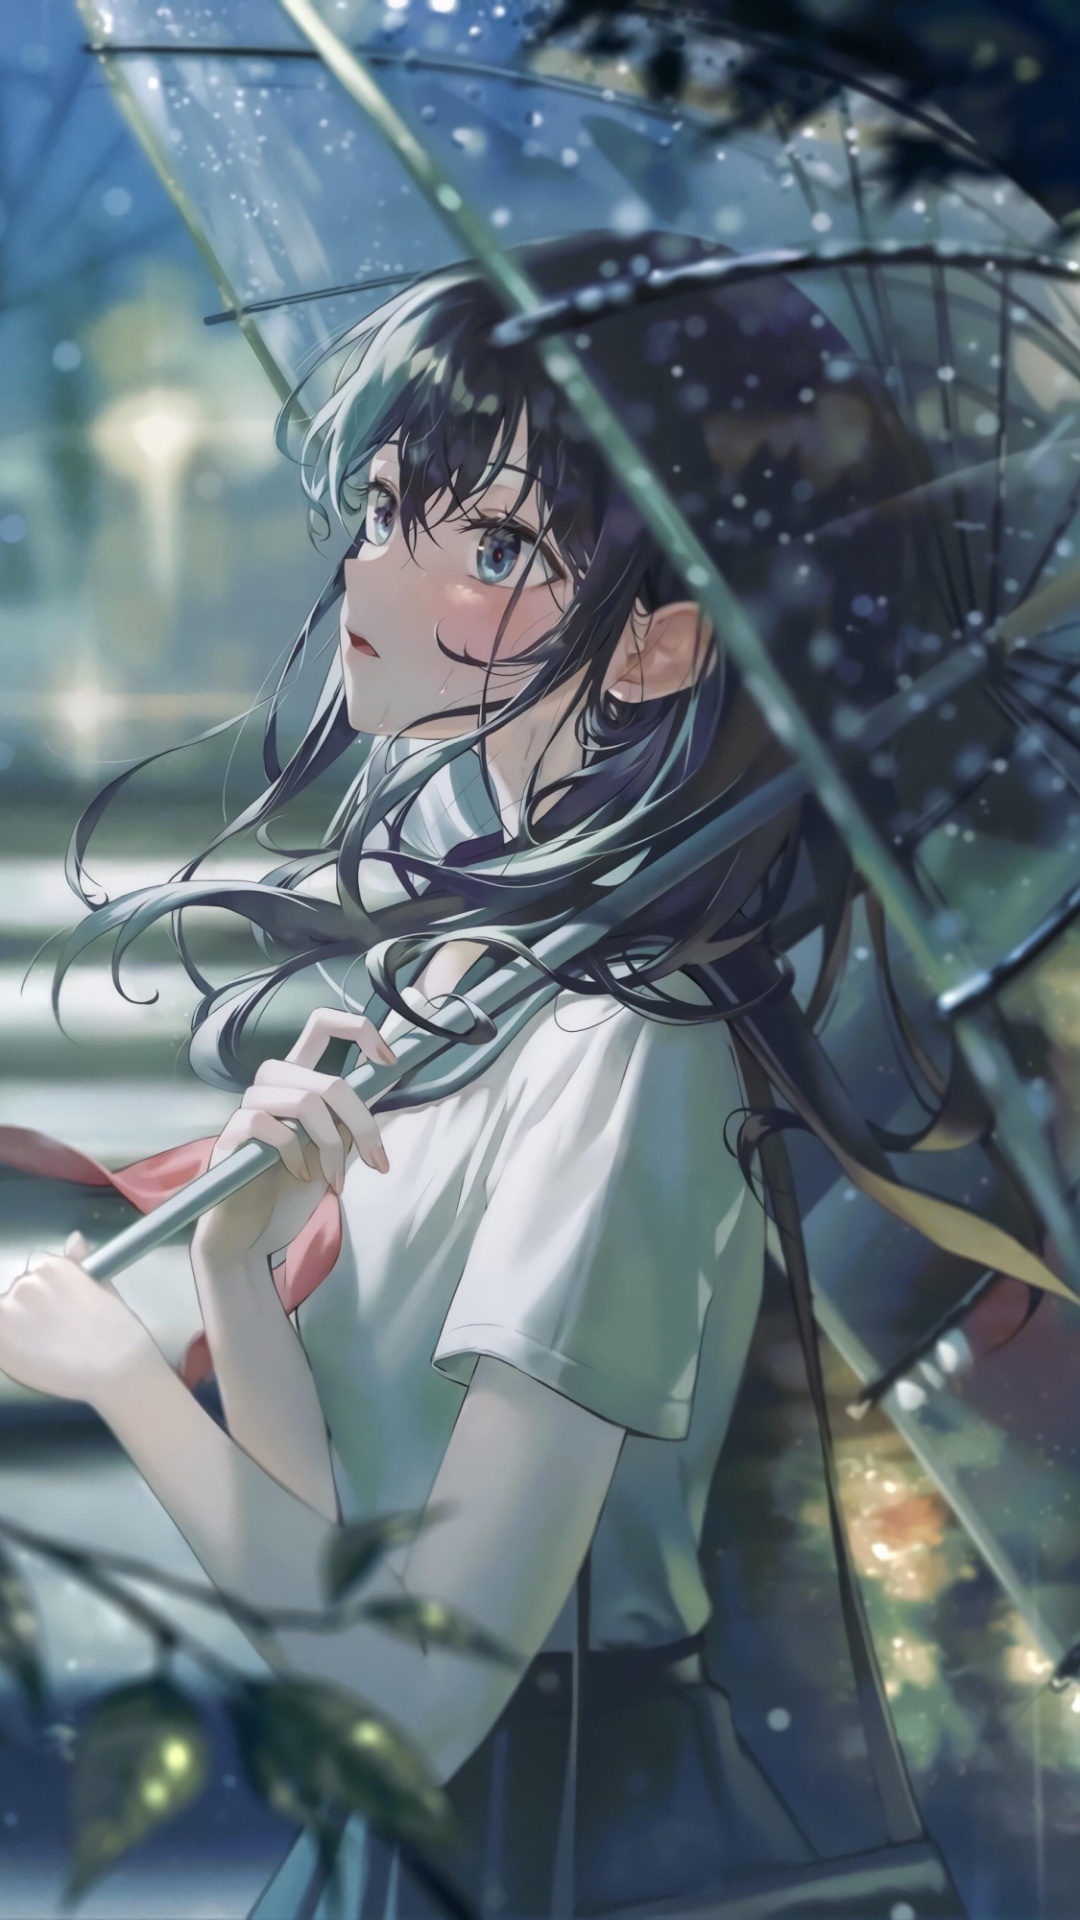 Anime Girl With Umbrella Full HD Wallpaper